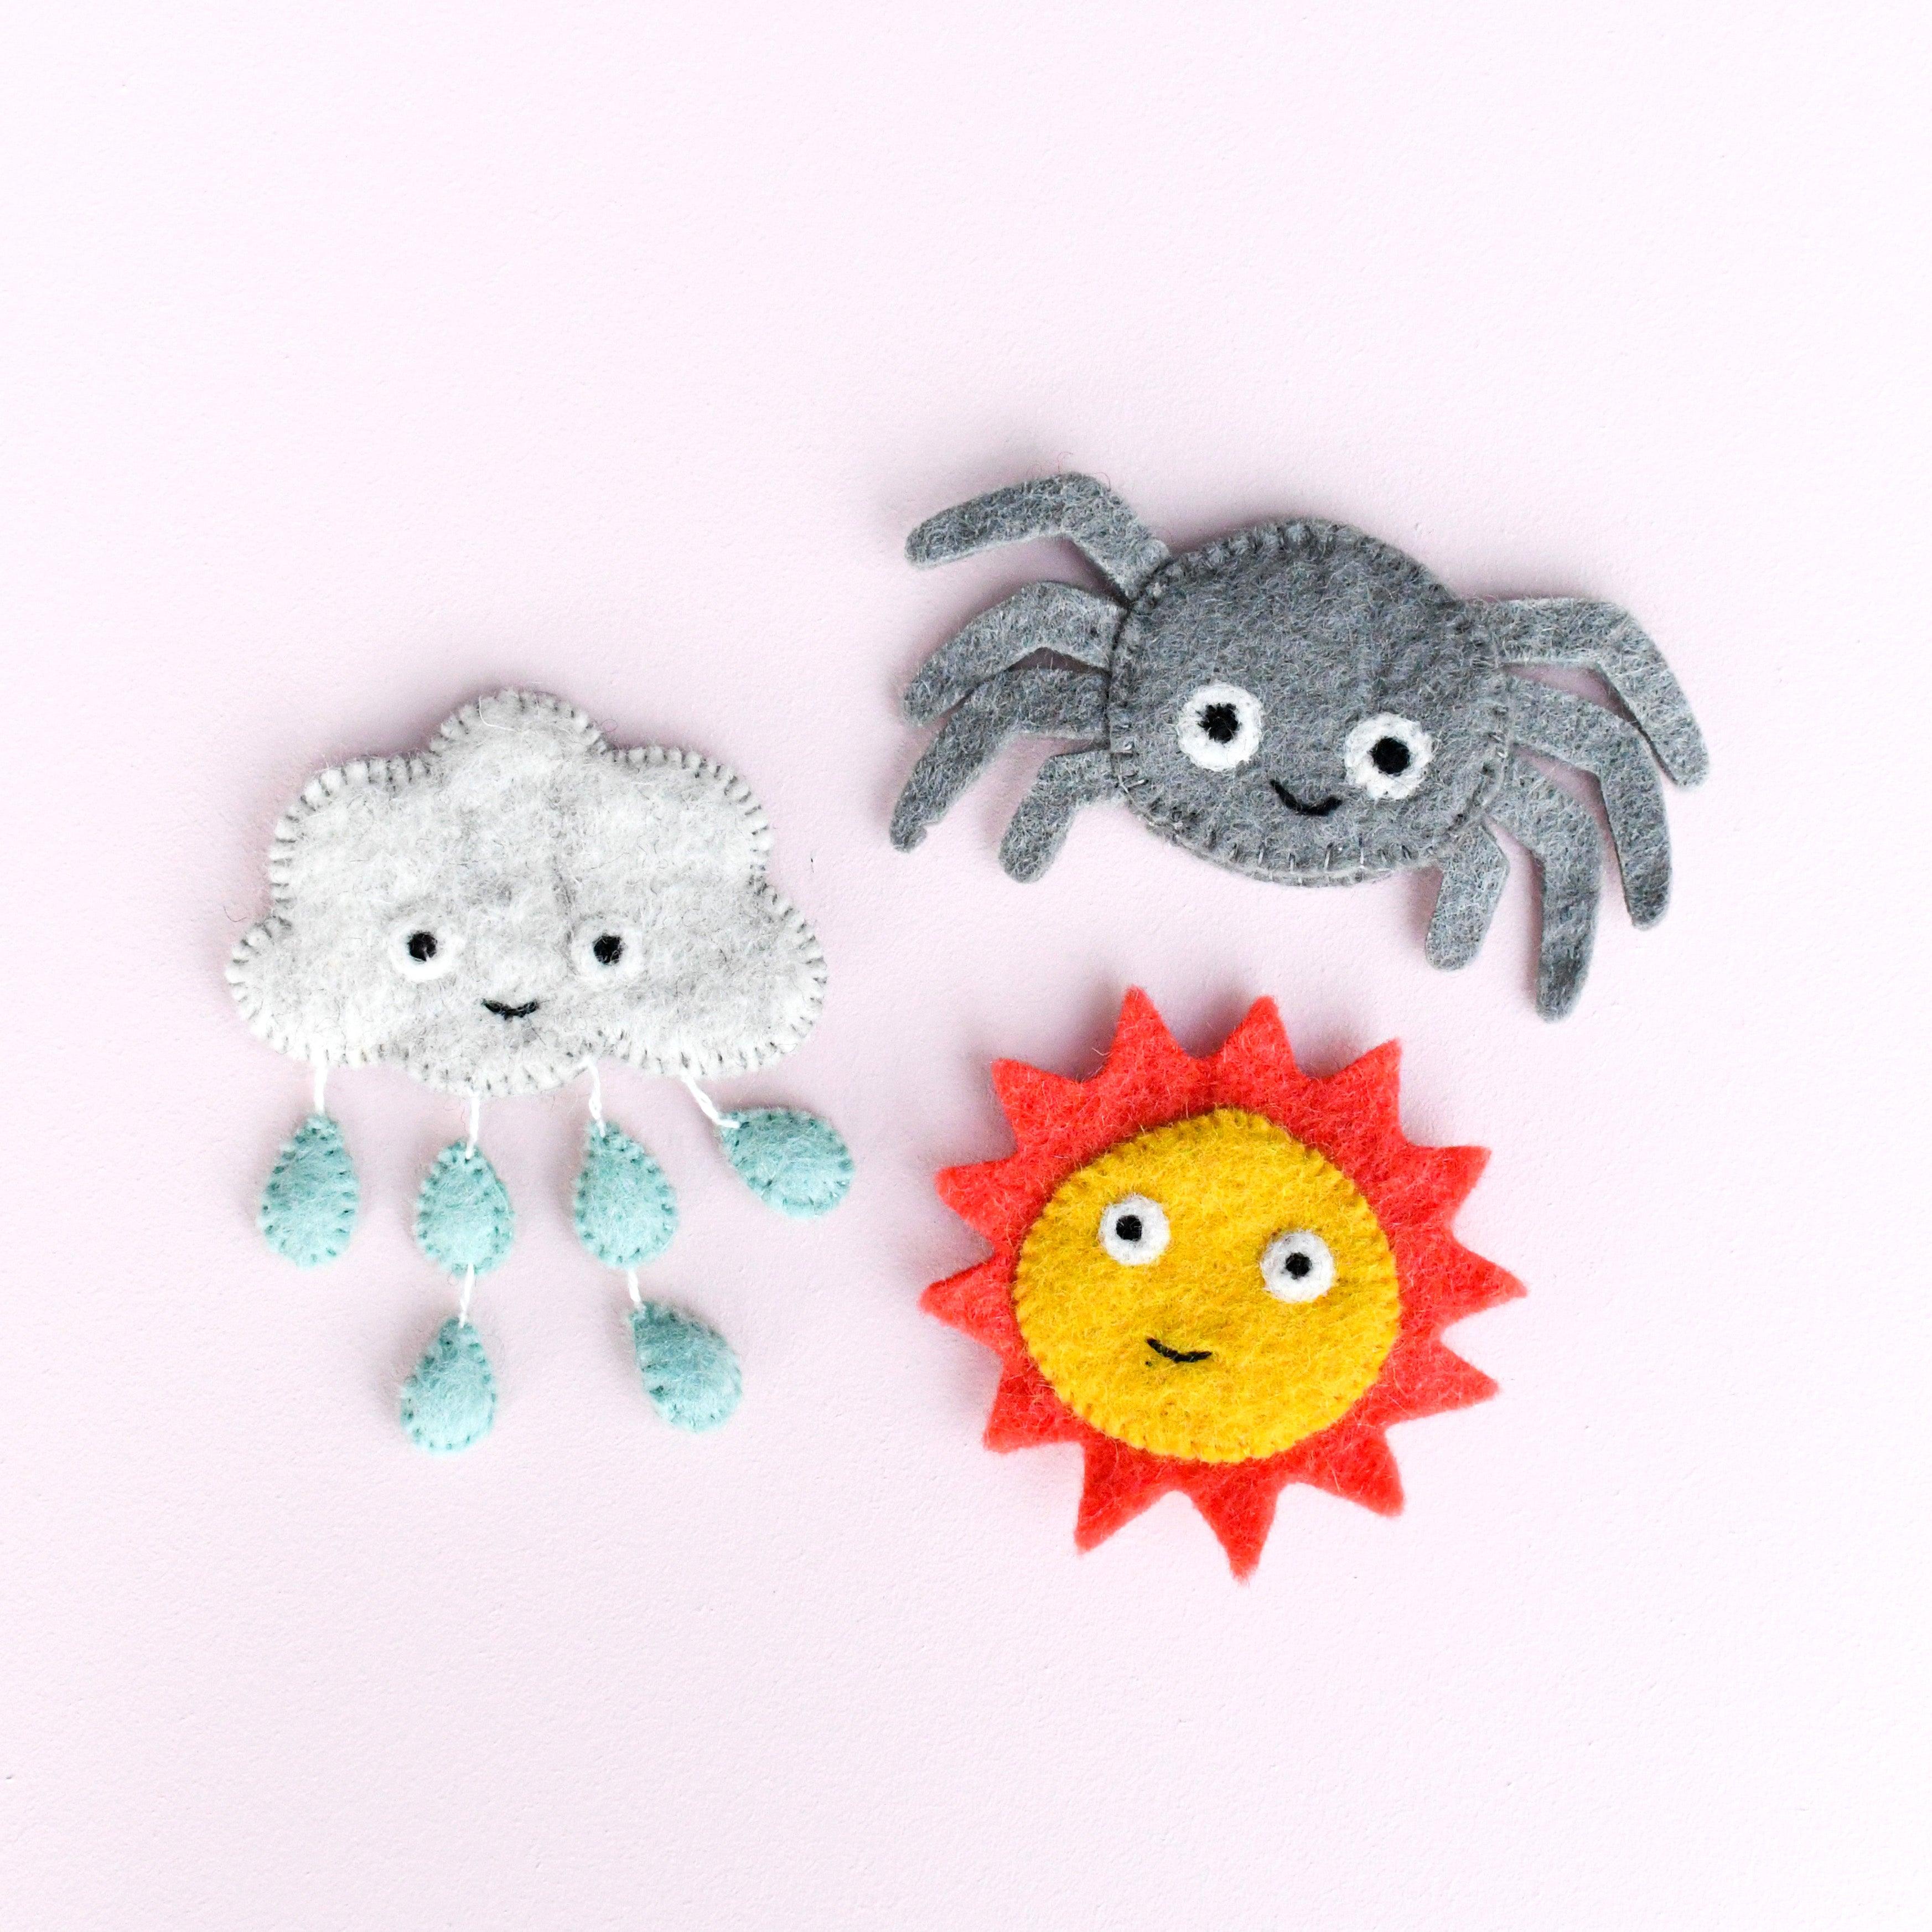 Itsy Bitsy Spider (Incy Wincy Spider), Finger Puppet Set - Tara Treasures